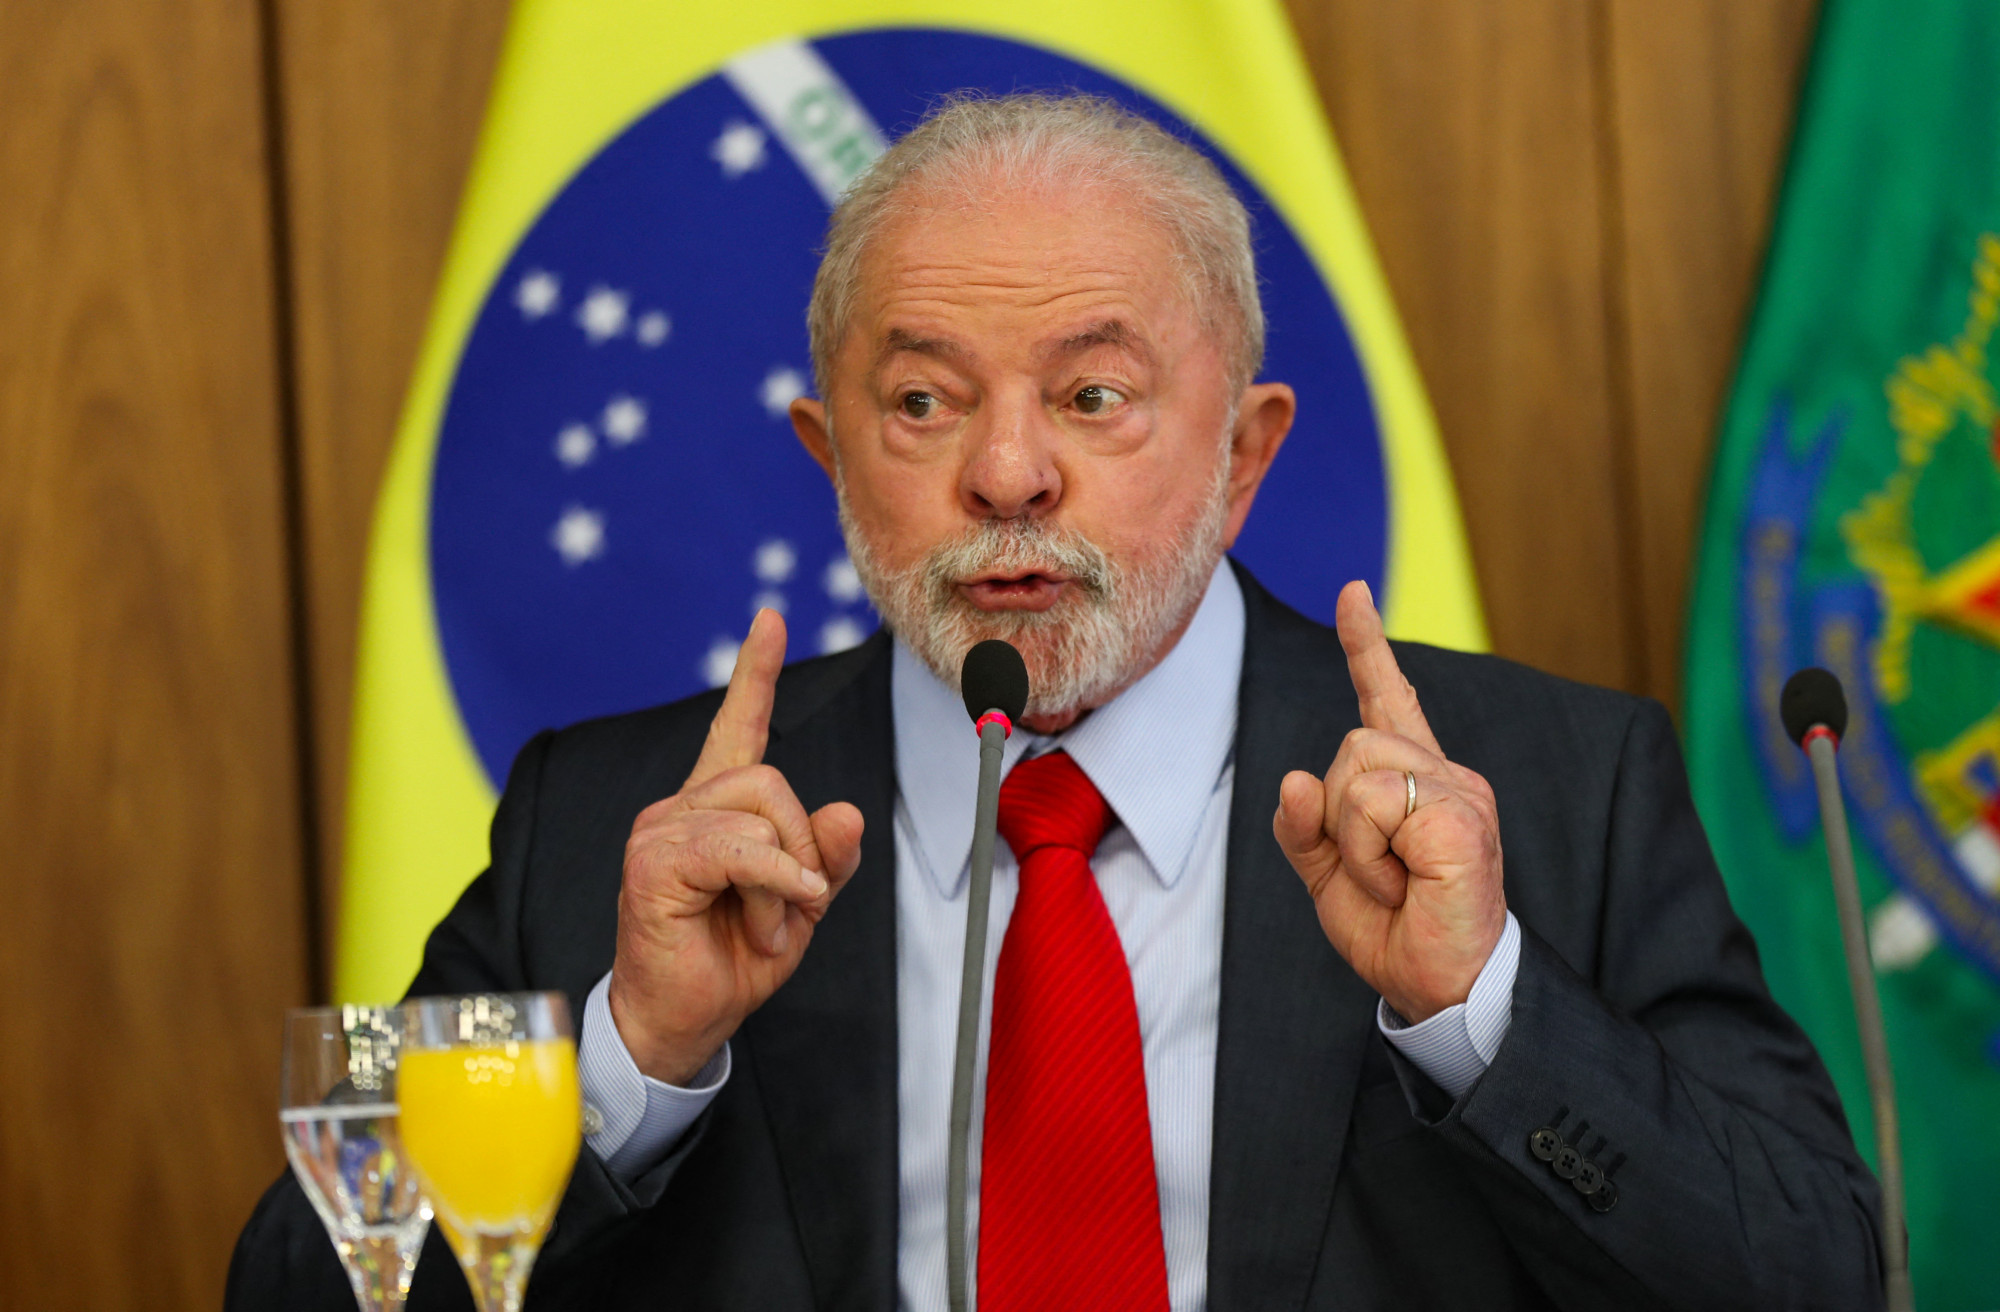 Luiz Inacio Lula da Silva brazil elnök január 12-én.